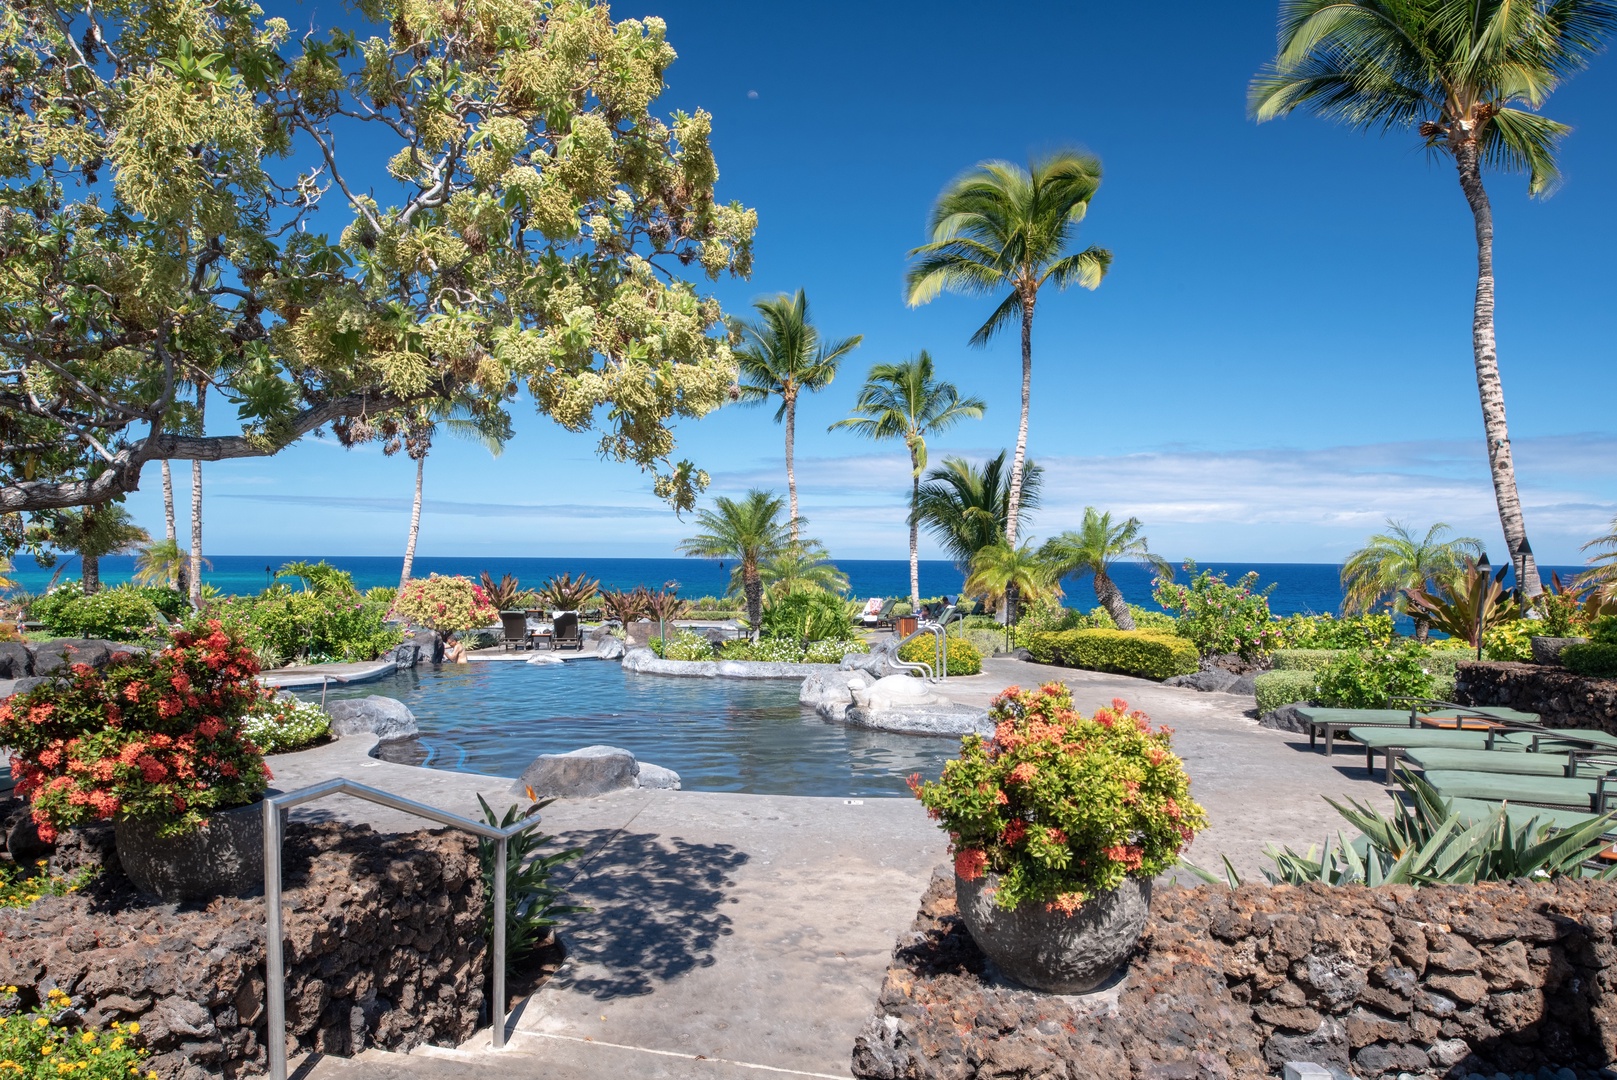 Waikoloa Vacation Rentals, 3BD Hali'i Kai (12G) at Waikoloa Resort - Hali'i Kai Resort's private pool w/ numerous lounge chairs to soak up the tropical sunshine!